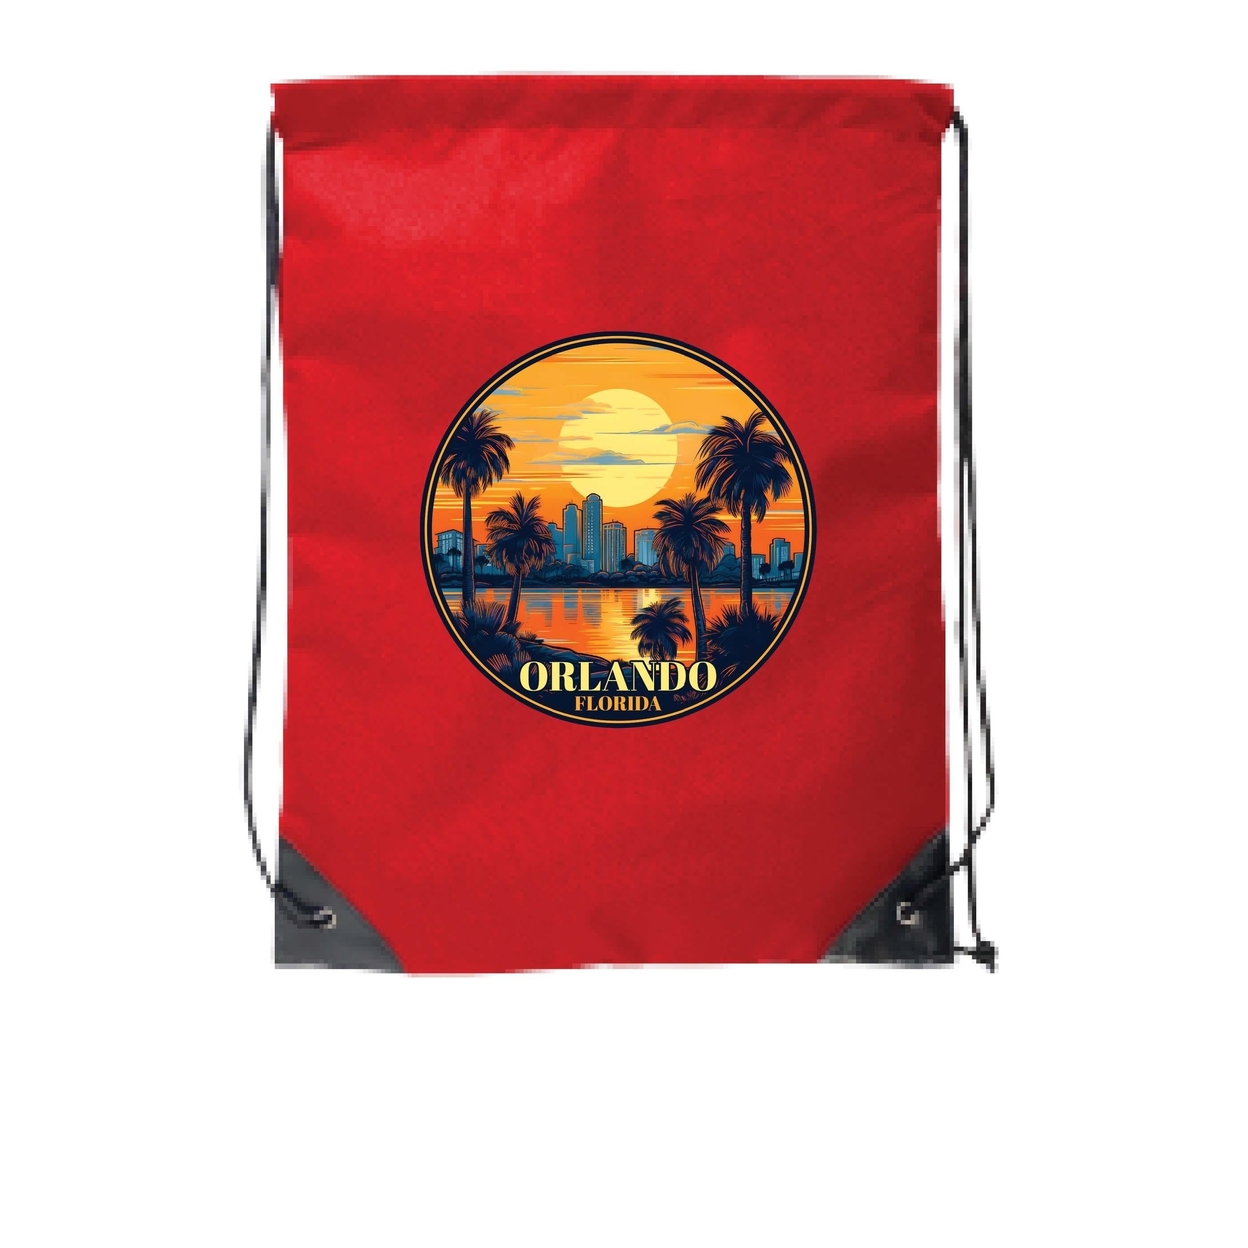 Orlando Florida B Souvenir Cinch Bag With Drawstring Backpack - Red